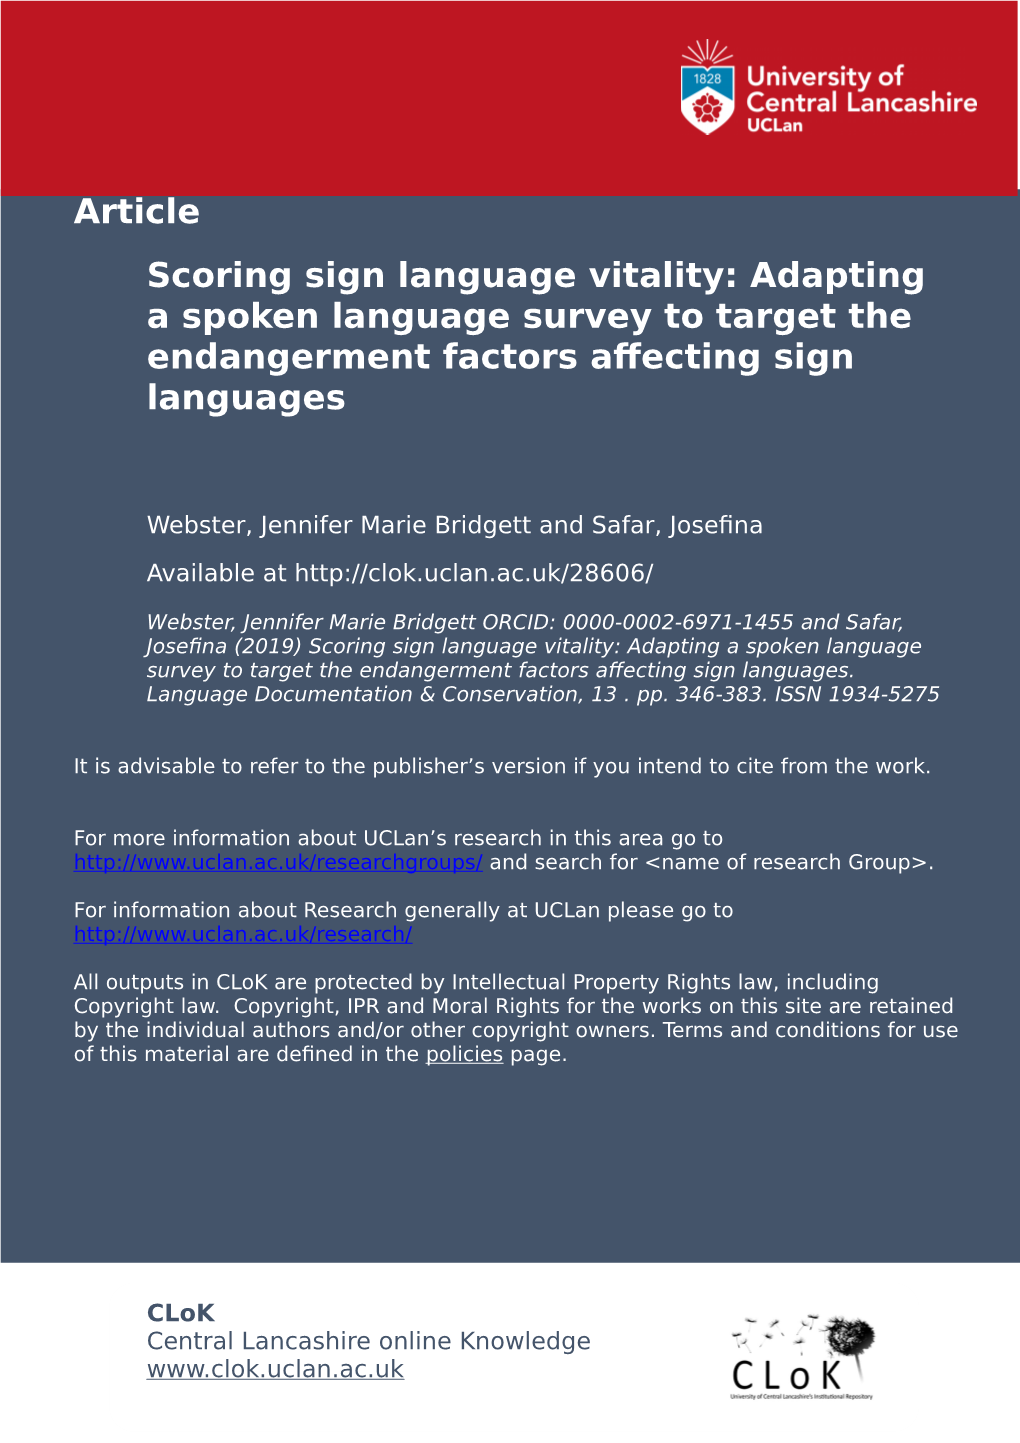 Scoring Sign Language Vitality: Adapting a Spoken Language Survey to Target the Endangerment Factors Affecting Sign Languages